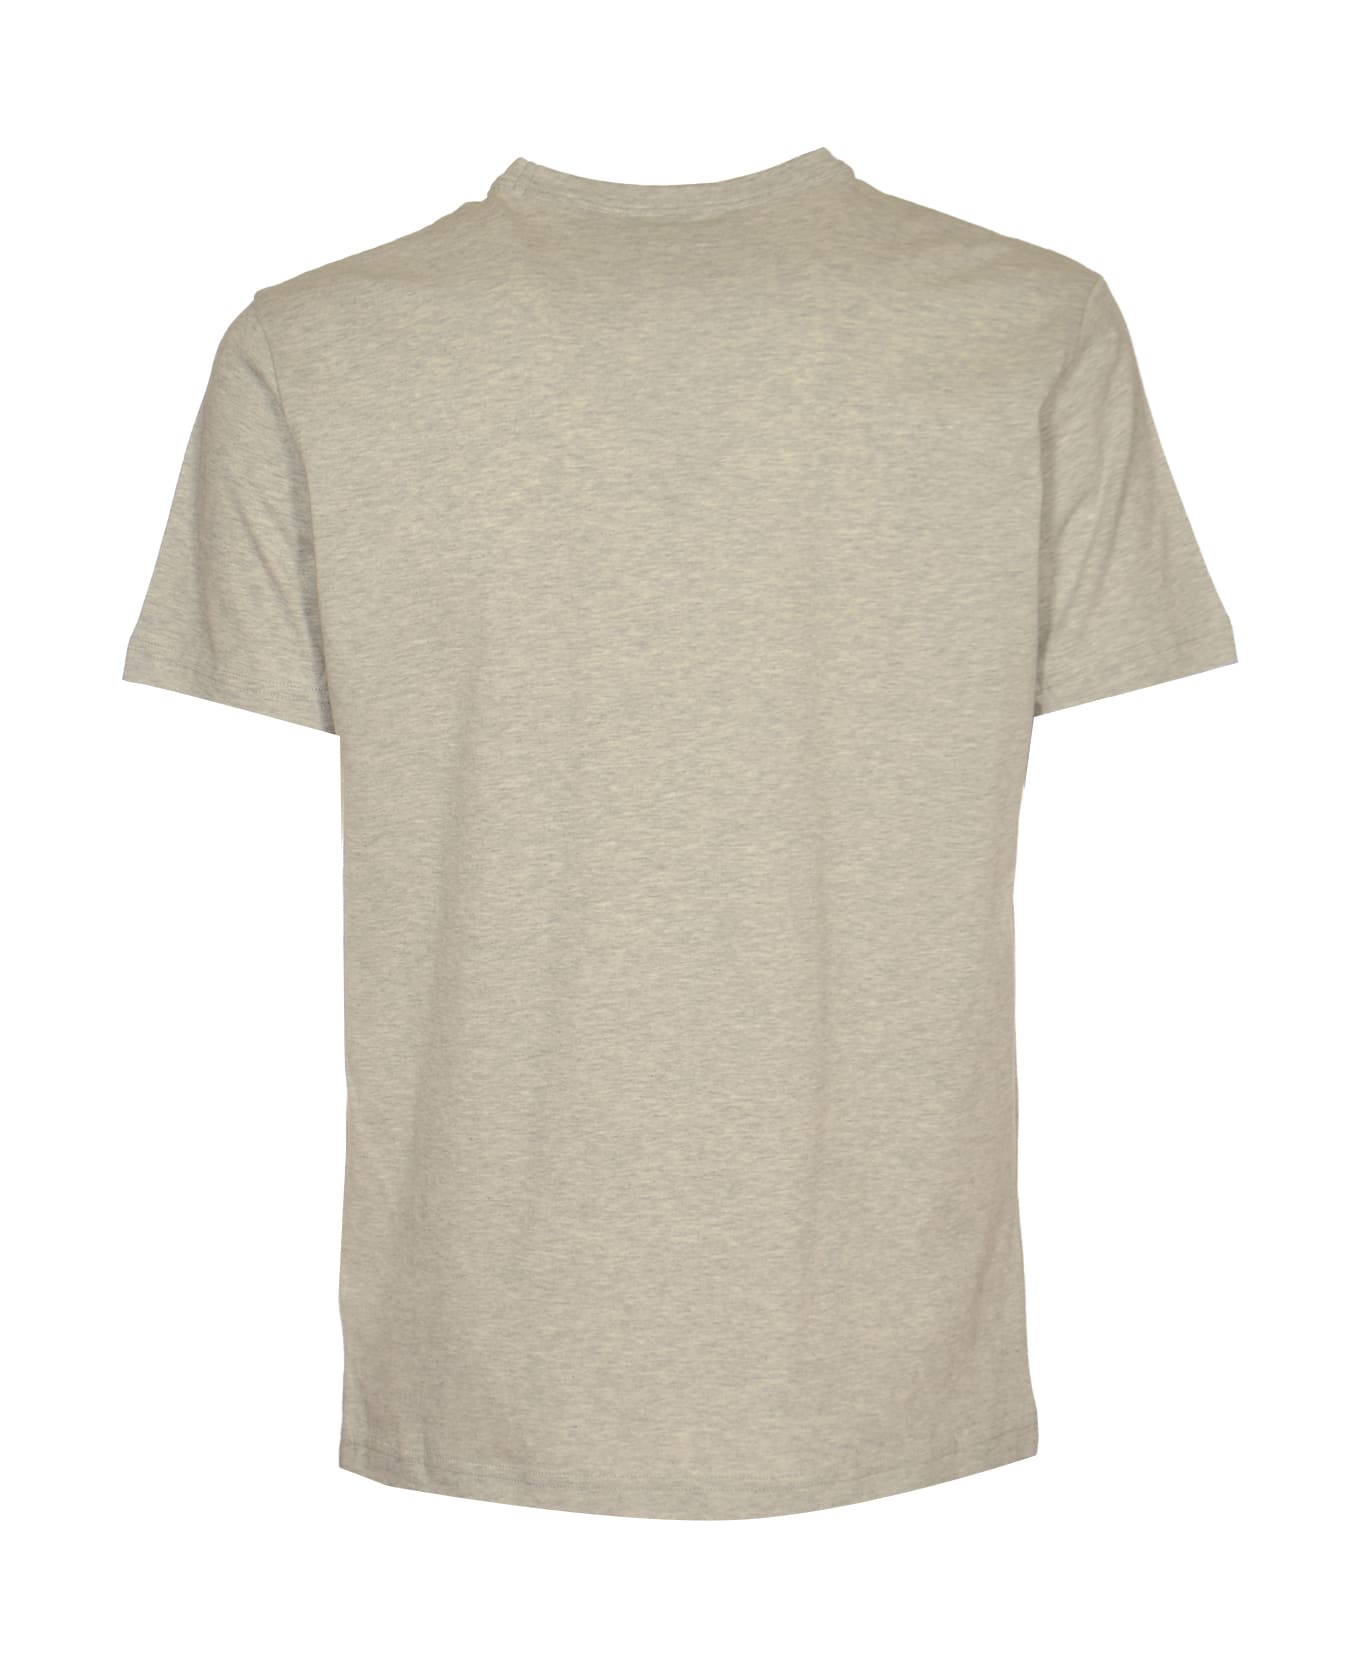 Belstaff Phoenix T-shirt - Old Silver シャツ